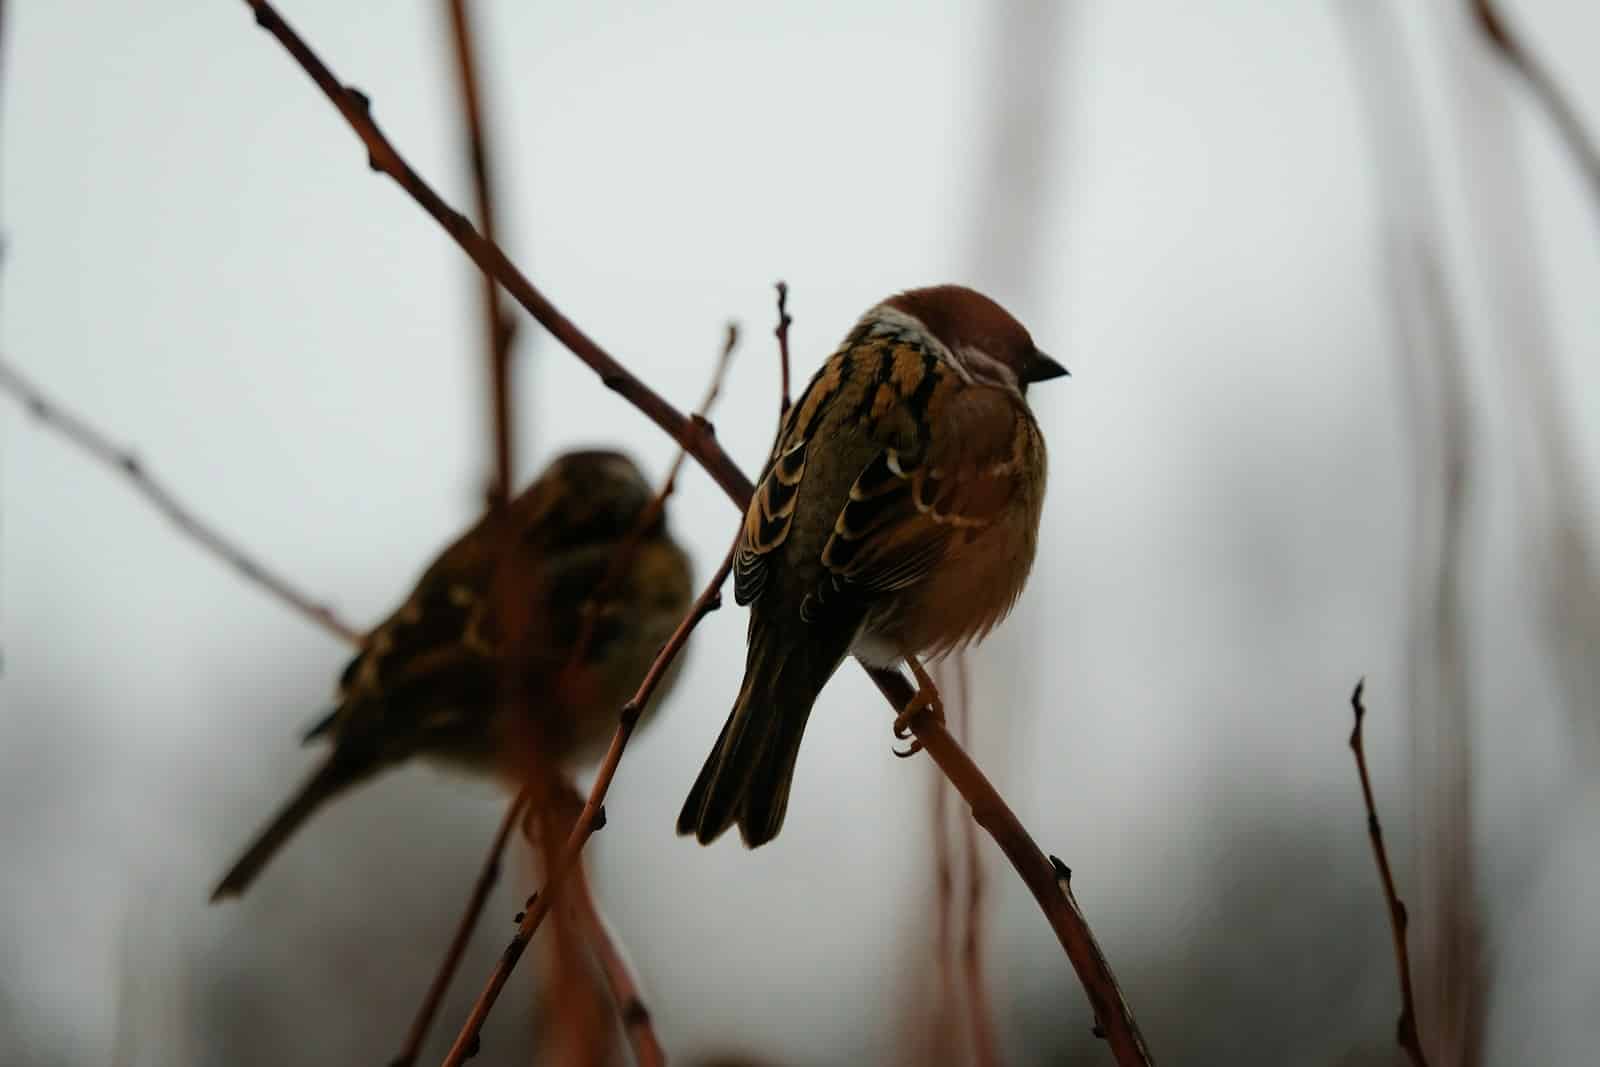 Do Sparrows Migrate?